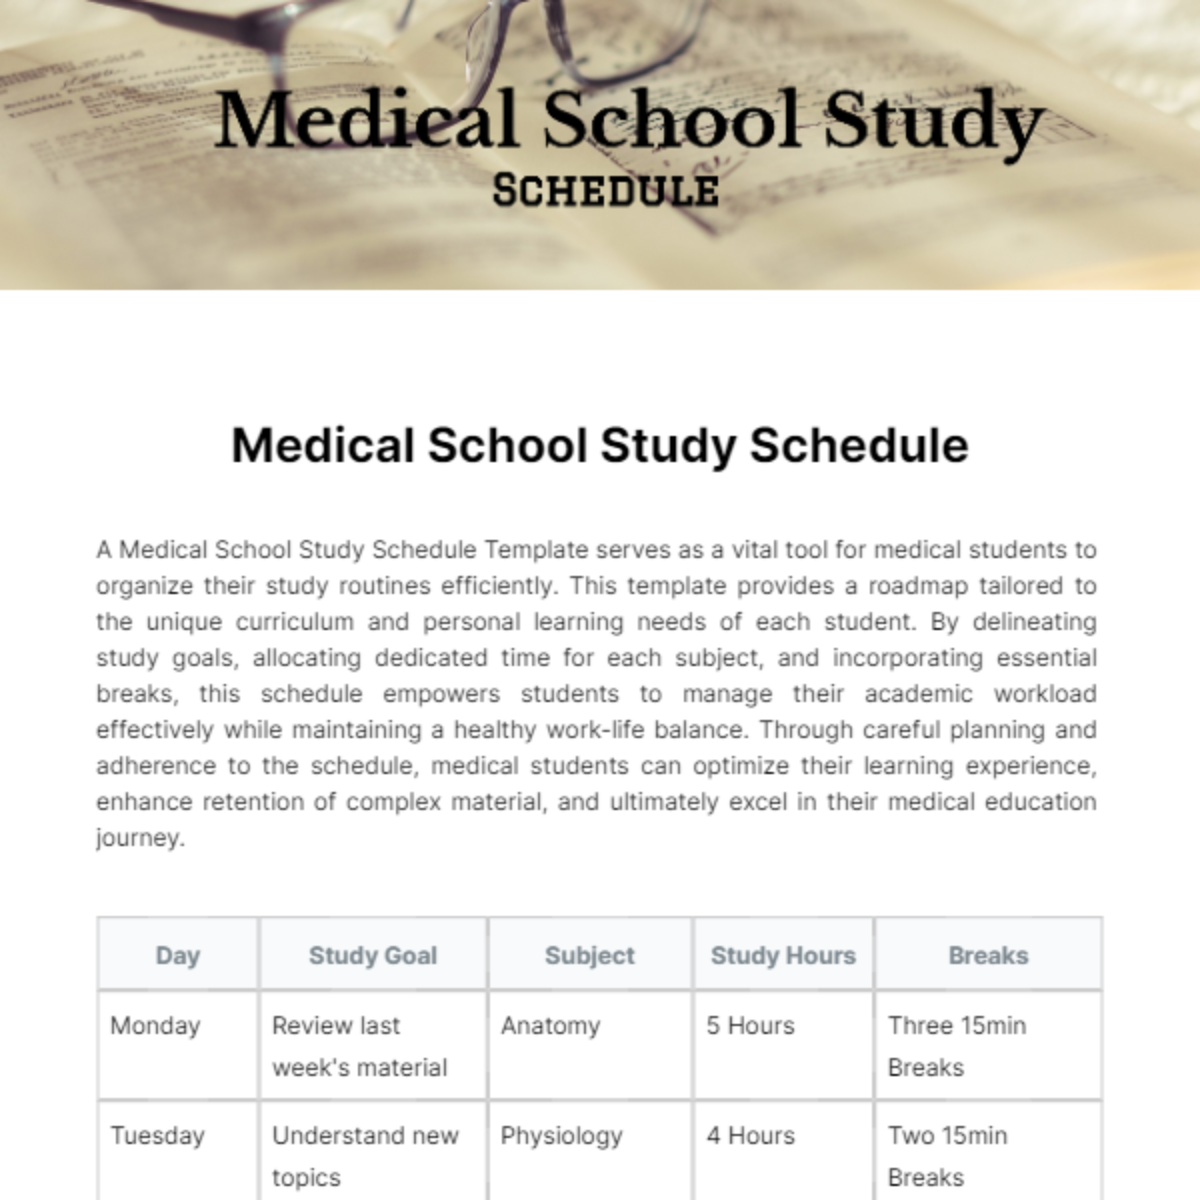 Medical School Study Schedule Template